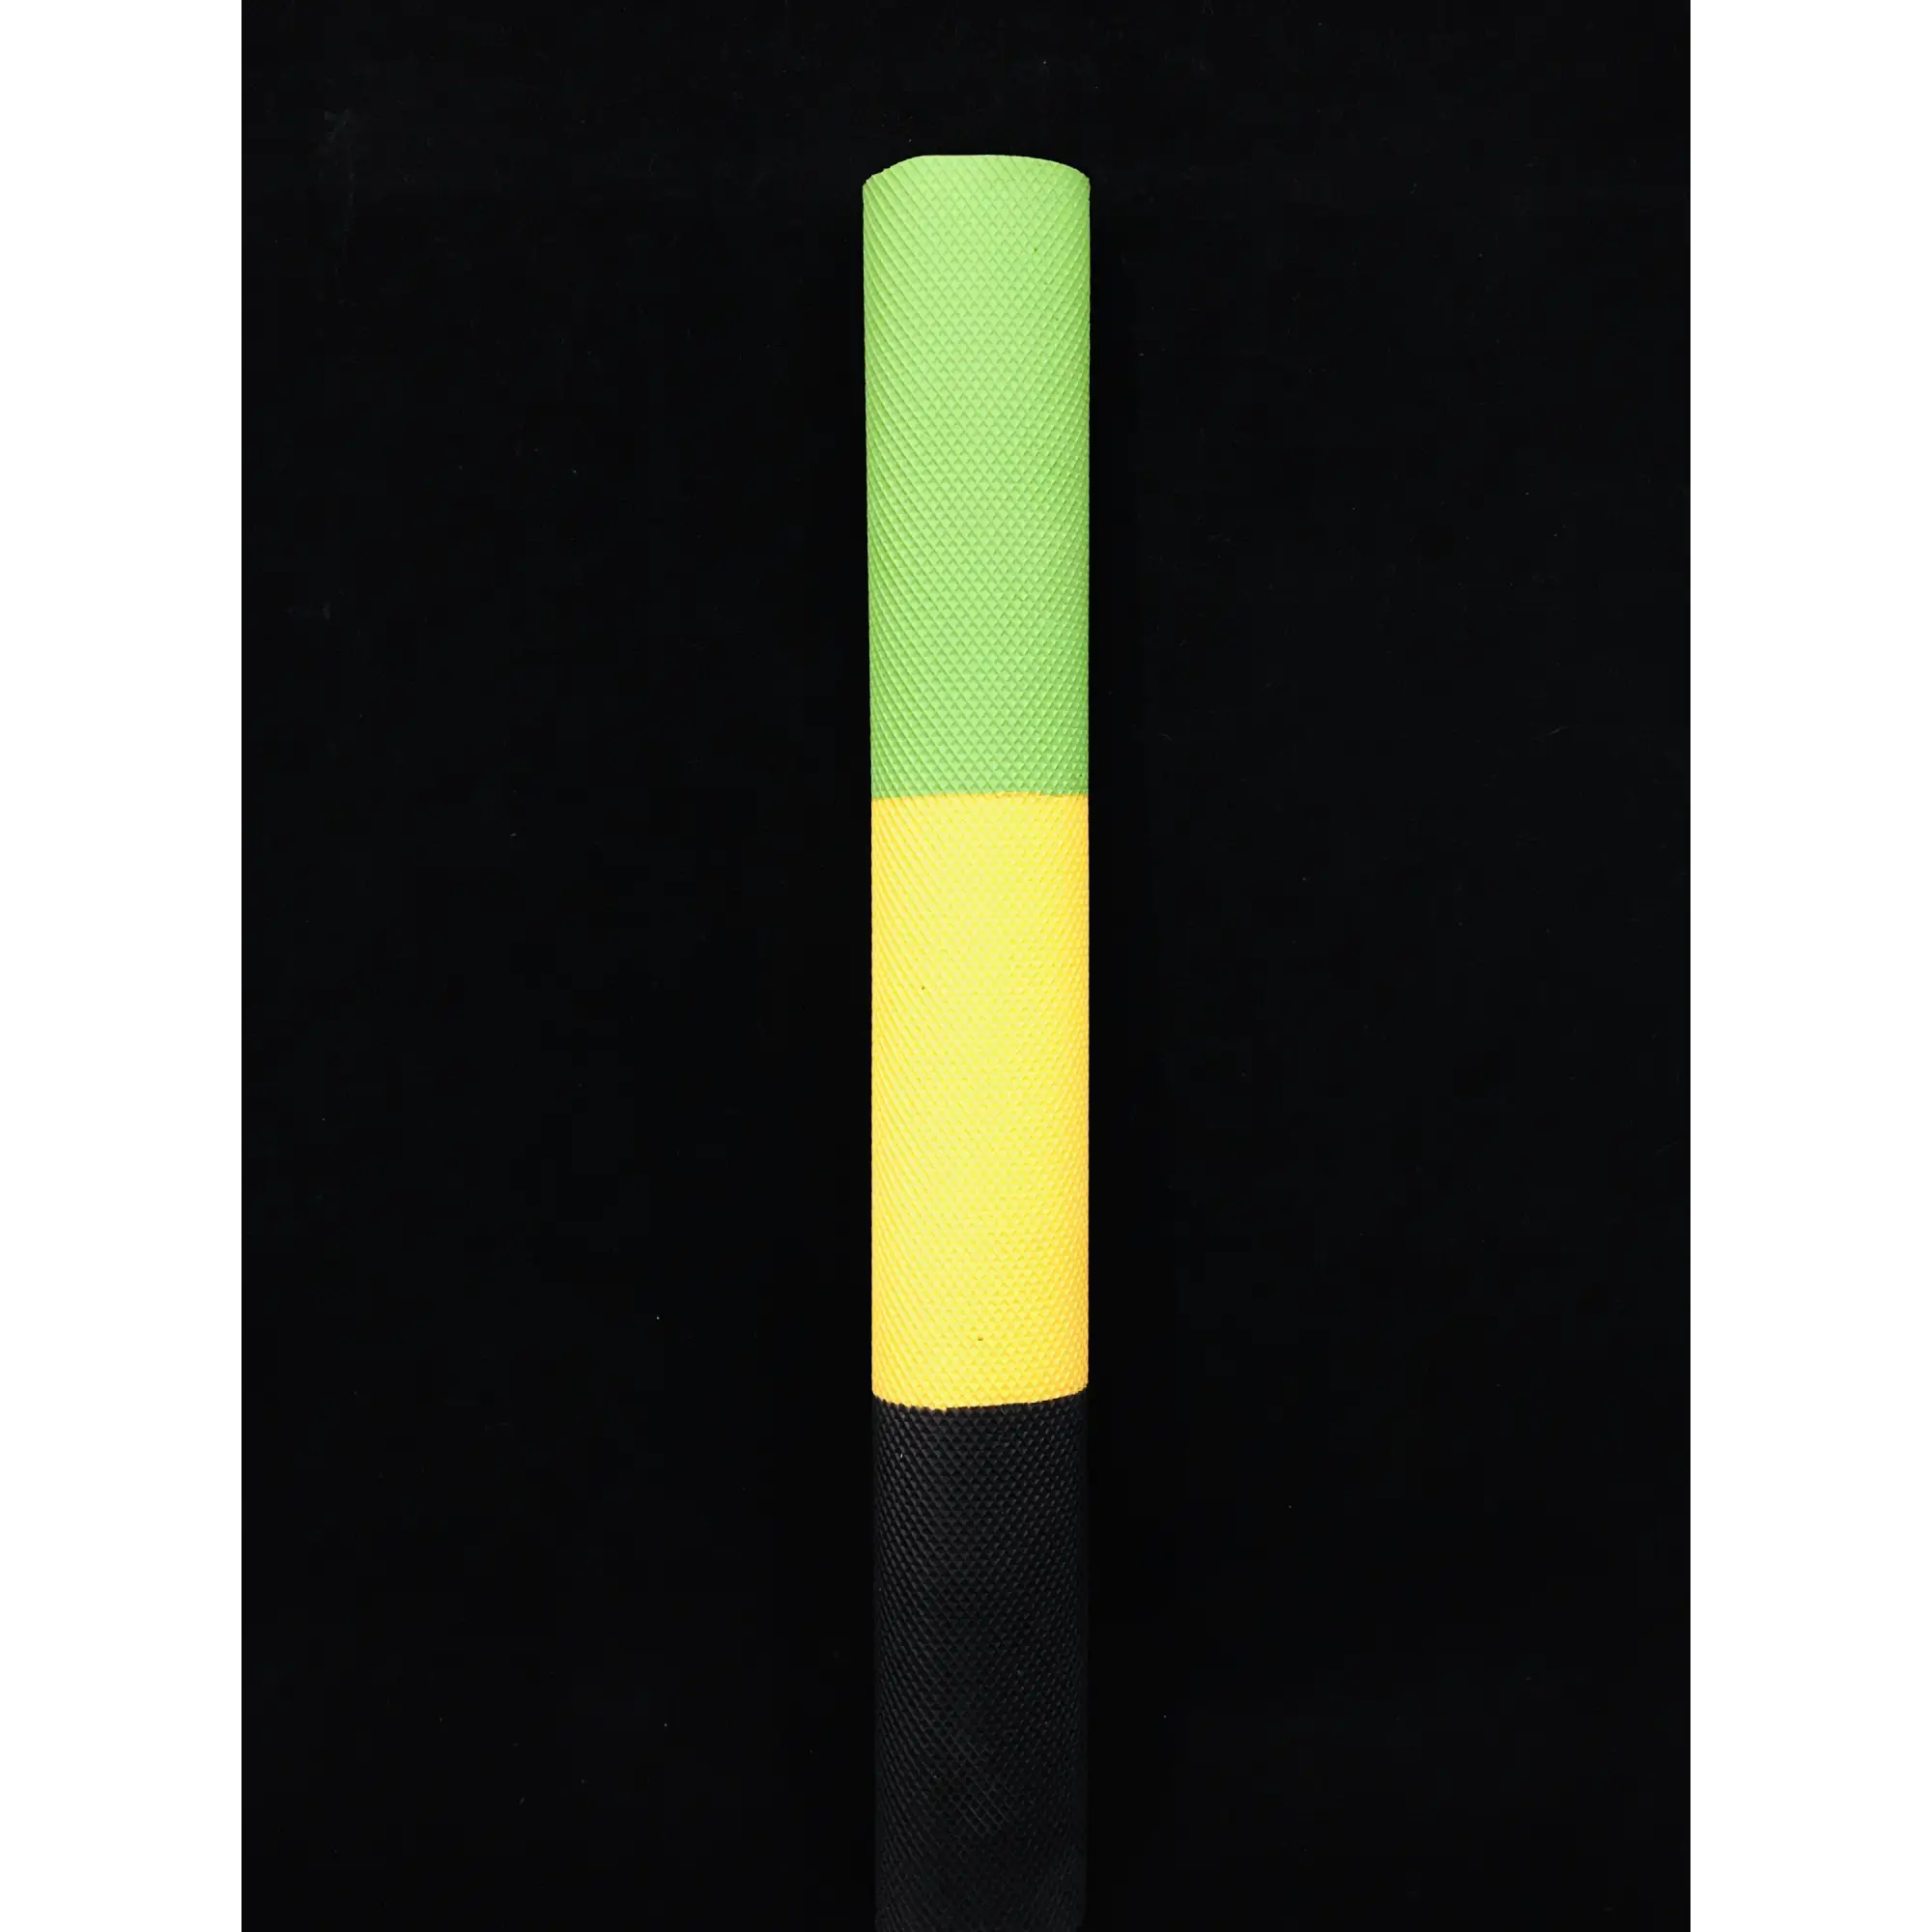 GR Cricket Bat Grip Diamond Design Full Green/Yellow/Black - Cricket Bat Grip